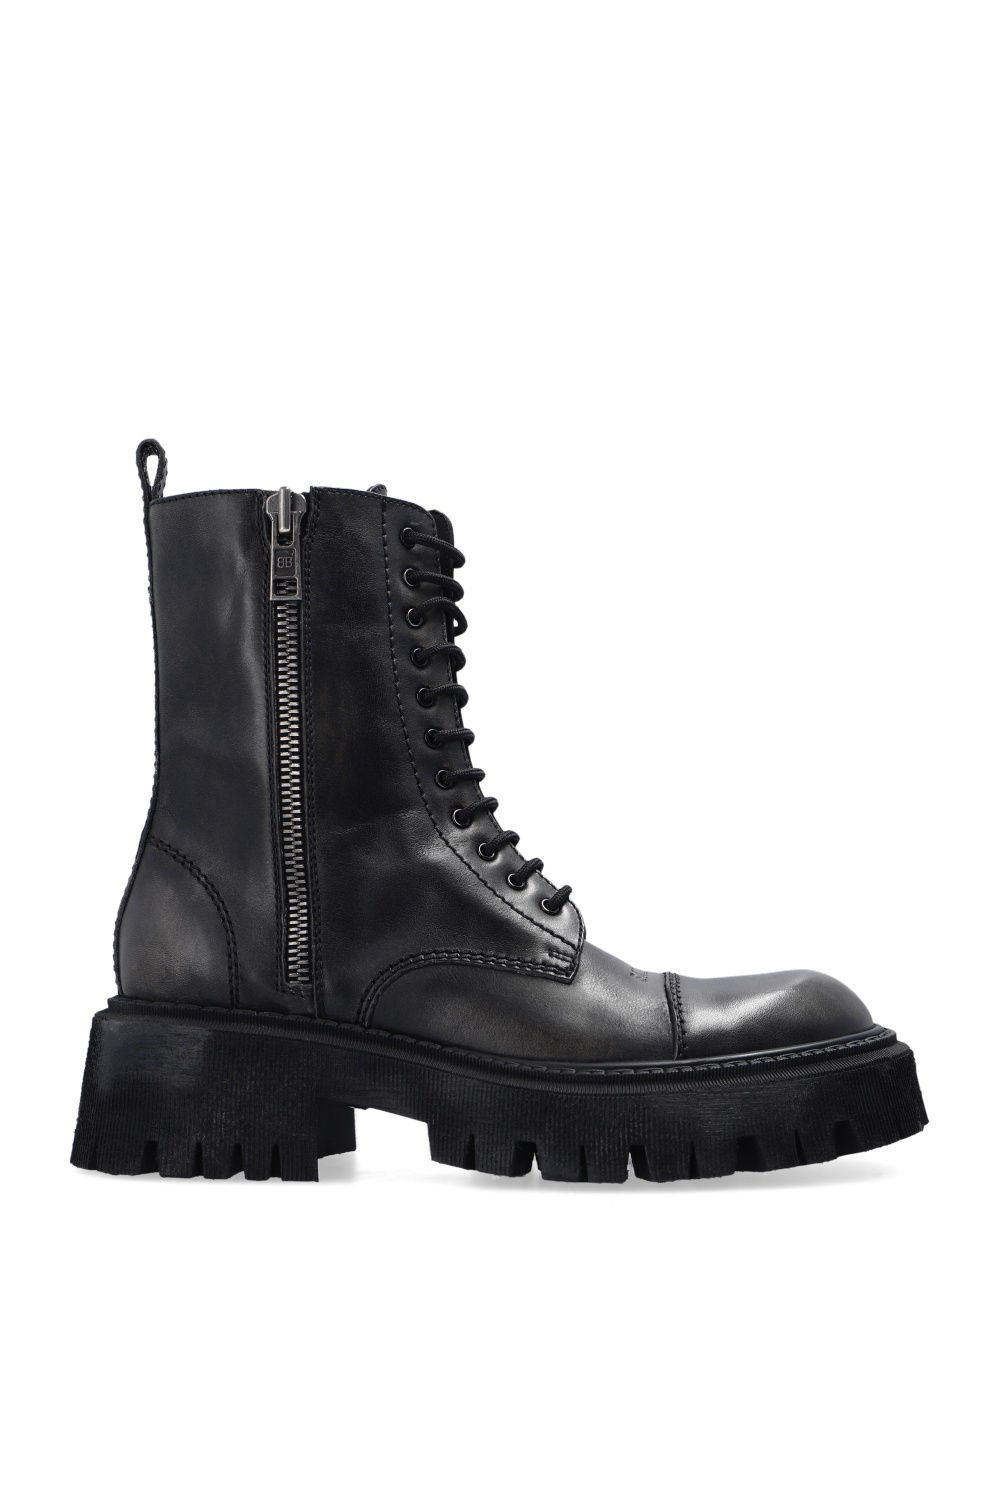 ‘Tractor’ ankle boots Balenciaga - Vitkac Australia